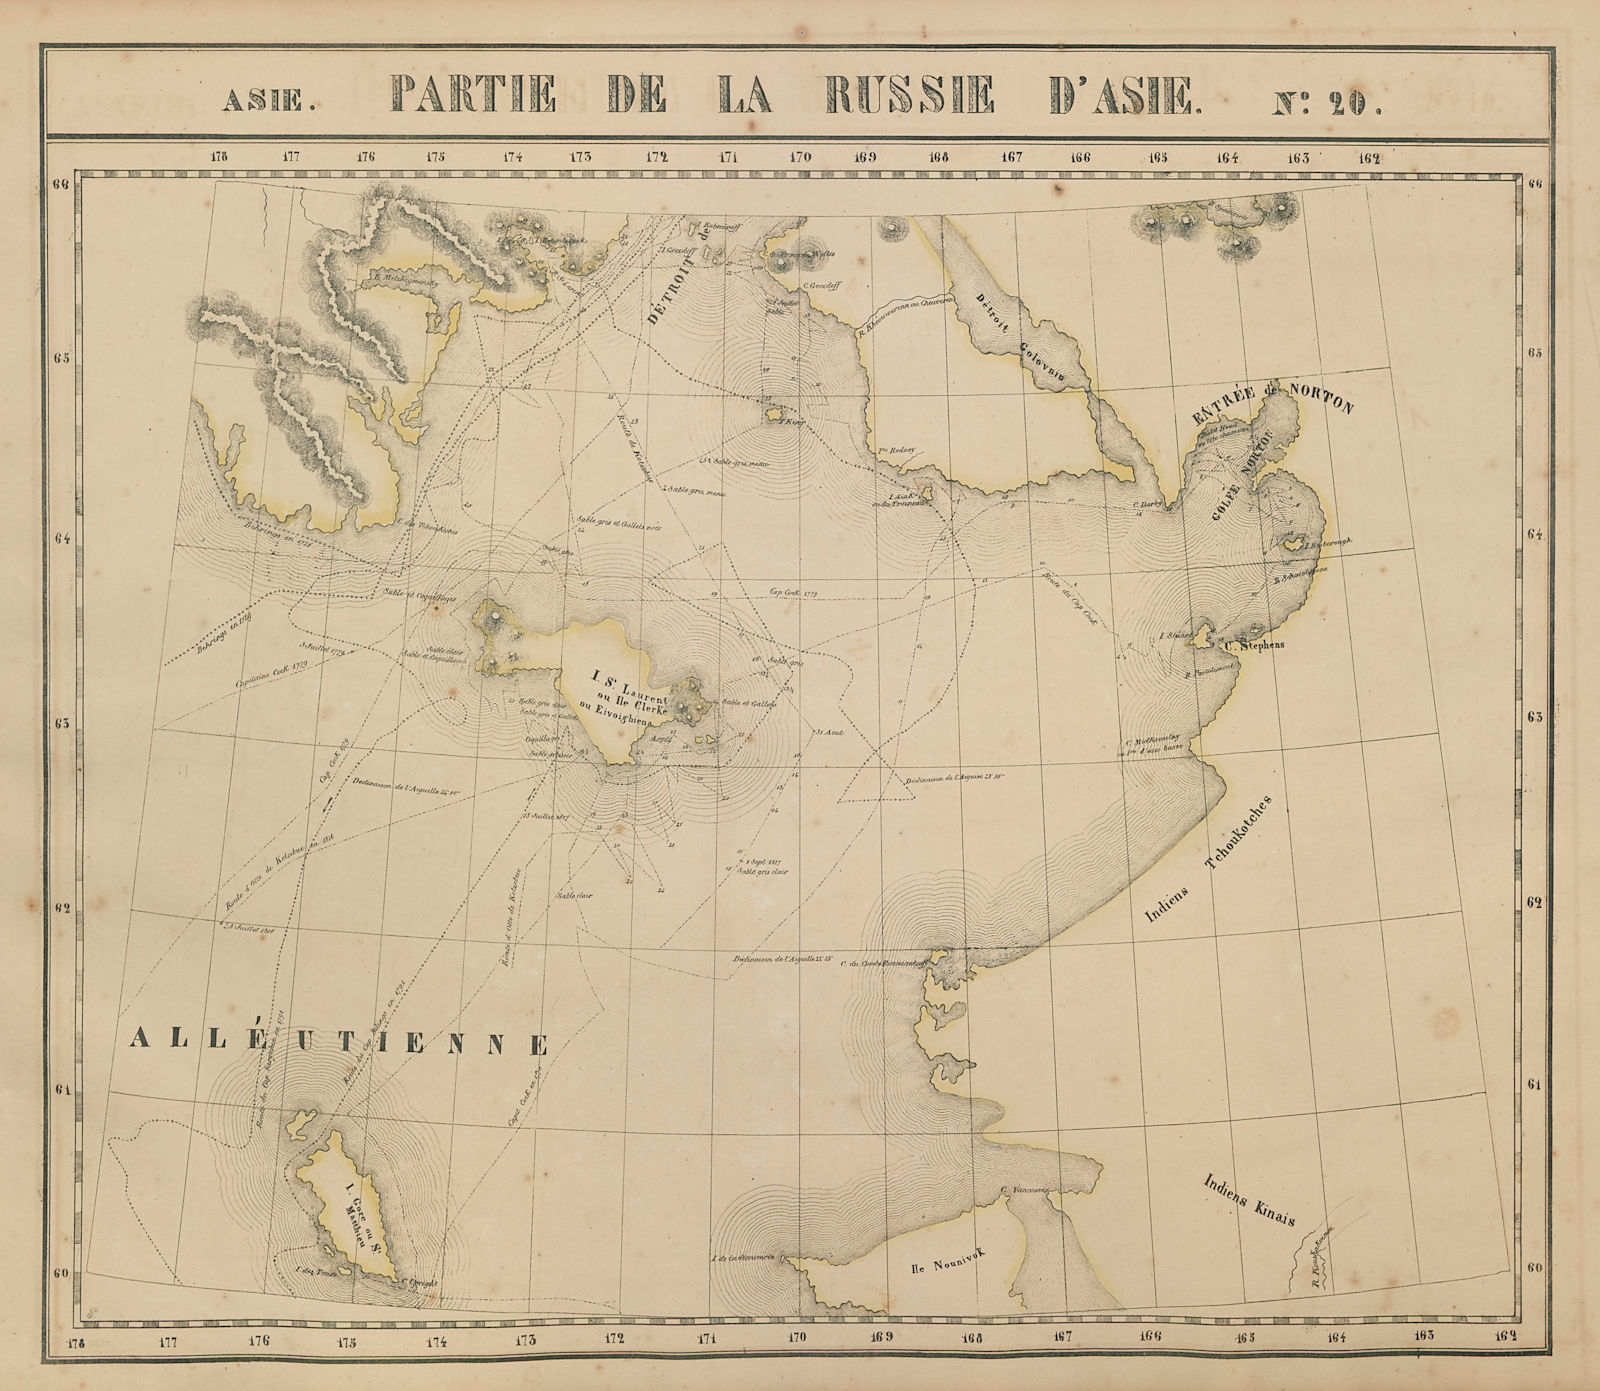 Russie d'Asie #20 Russia Alaska Bering Strait Norton Sound VANDERMAELEN 1827 map